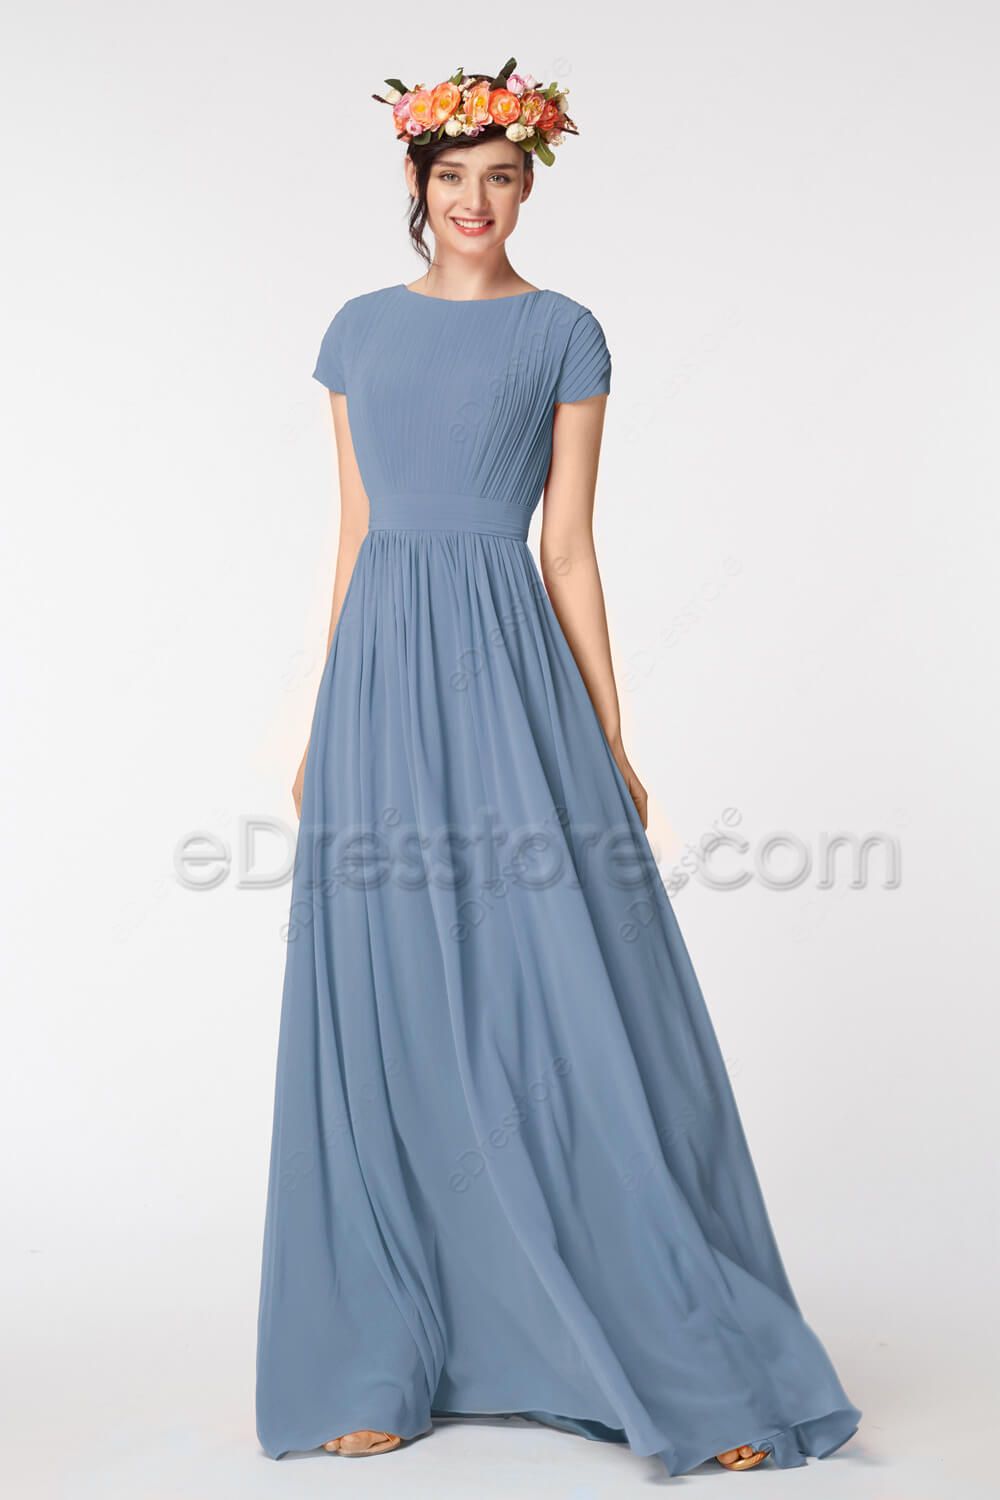 periwinkle blue dress